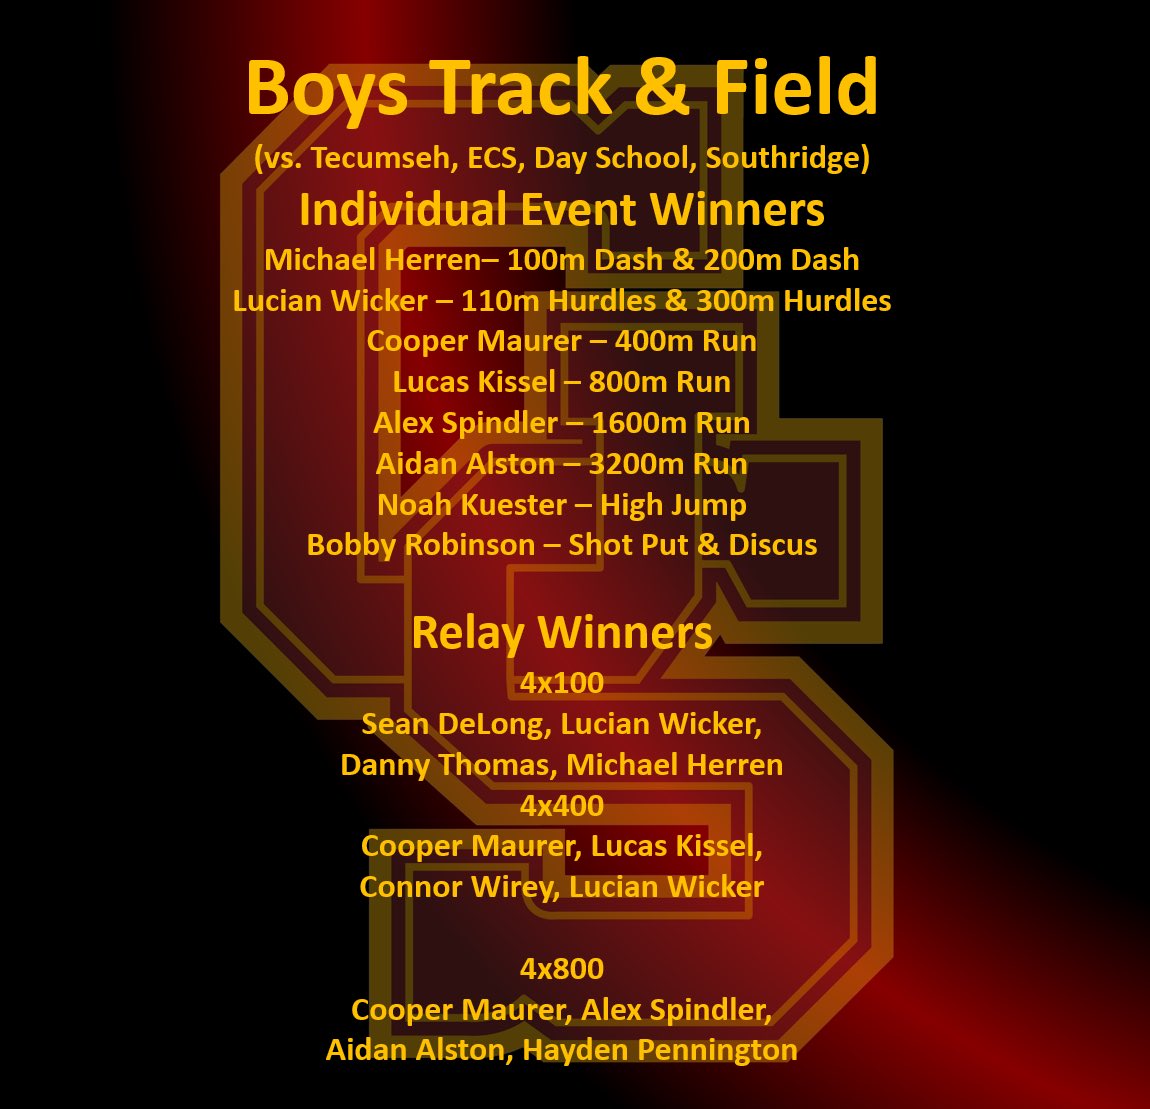 Boys Track & Field | Final

Gibson Southern 202
Southridge 51
Tecumseh 44
ECS 18
Day School 8

Titan event winners are listed. 

#titanpride